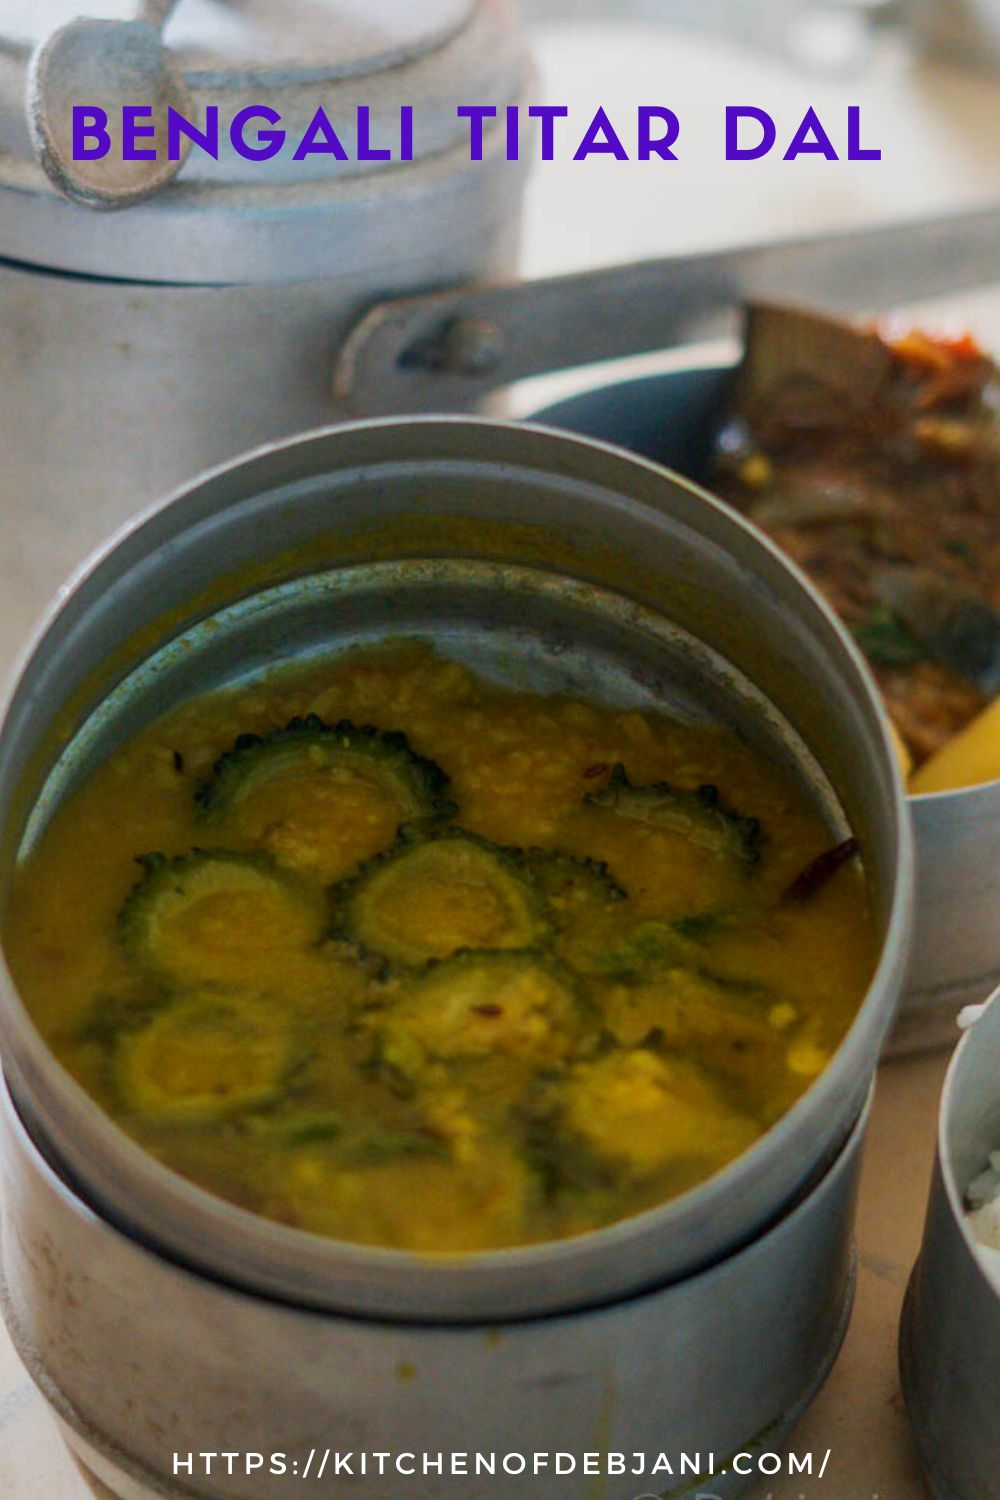 %Bengali Titar Dal recipe debjanir rannaghar Photo Food Pinterest Pin